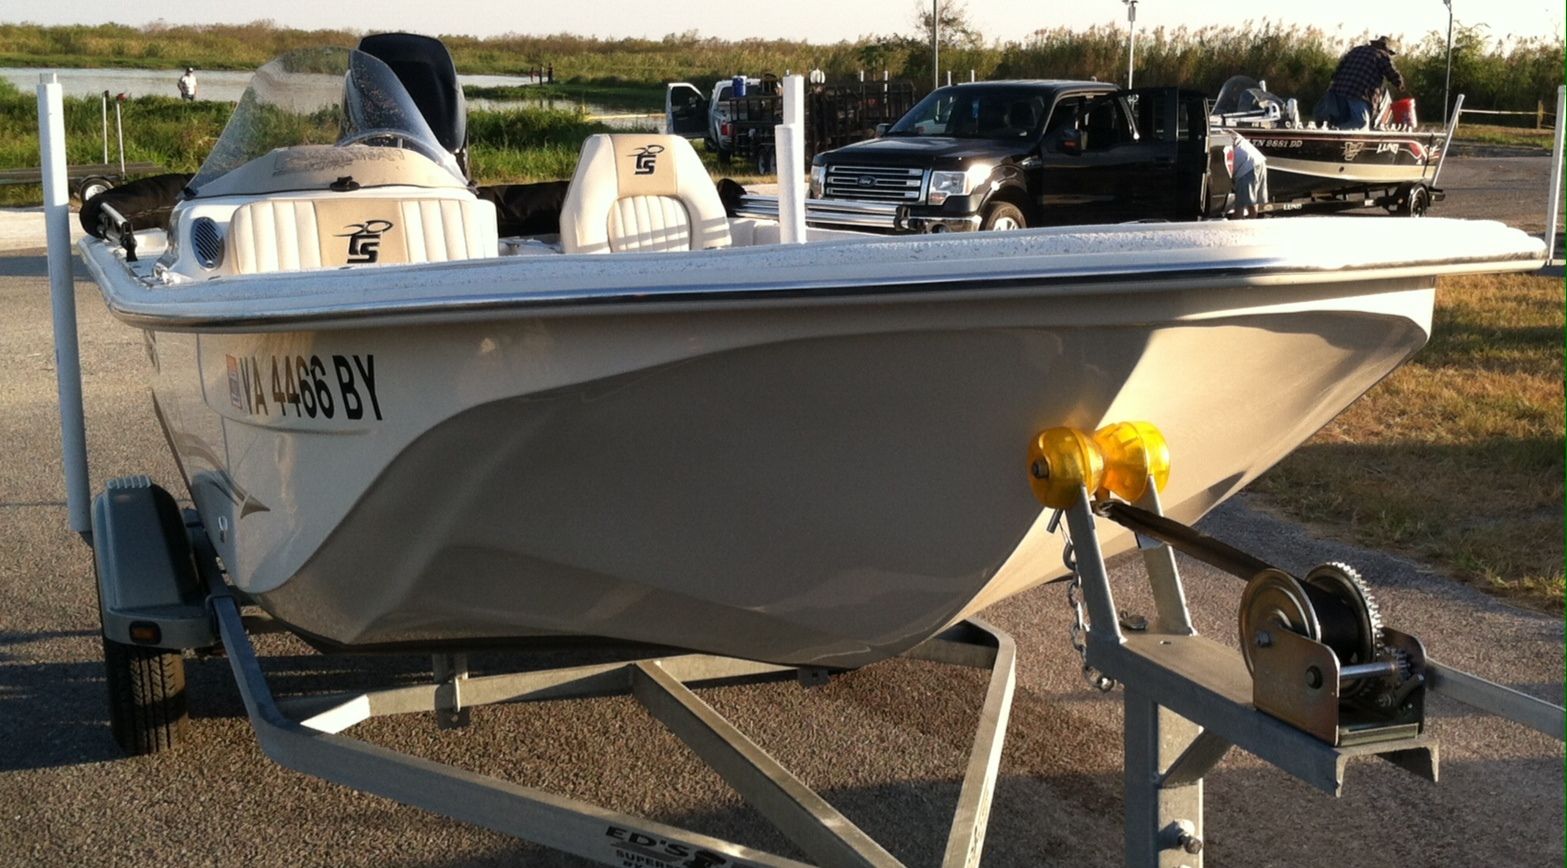 Carolina Skiff JVX 2015 for sale for $1 - Boats-from-USA.com